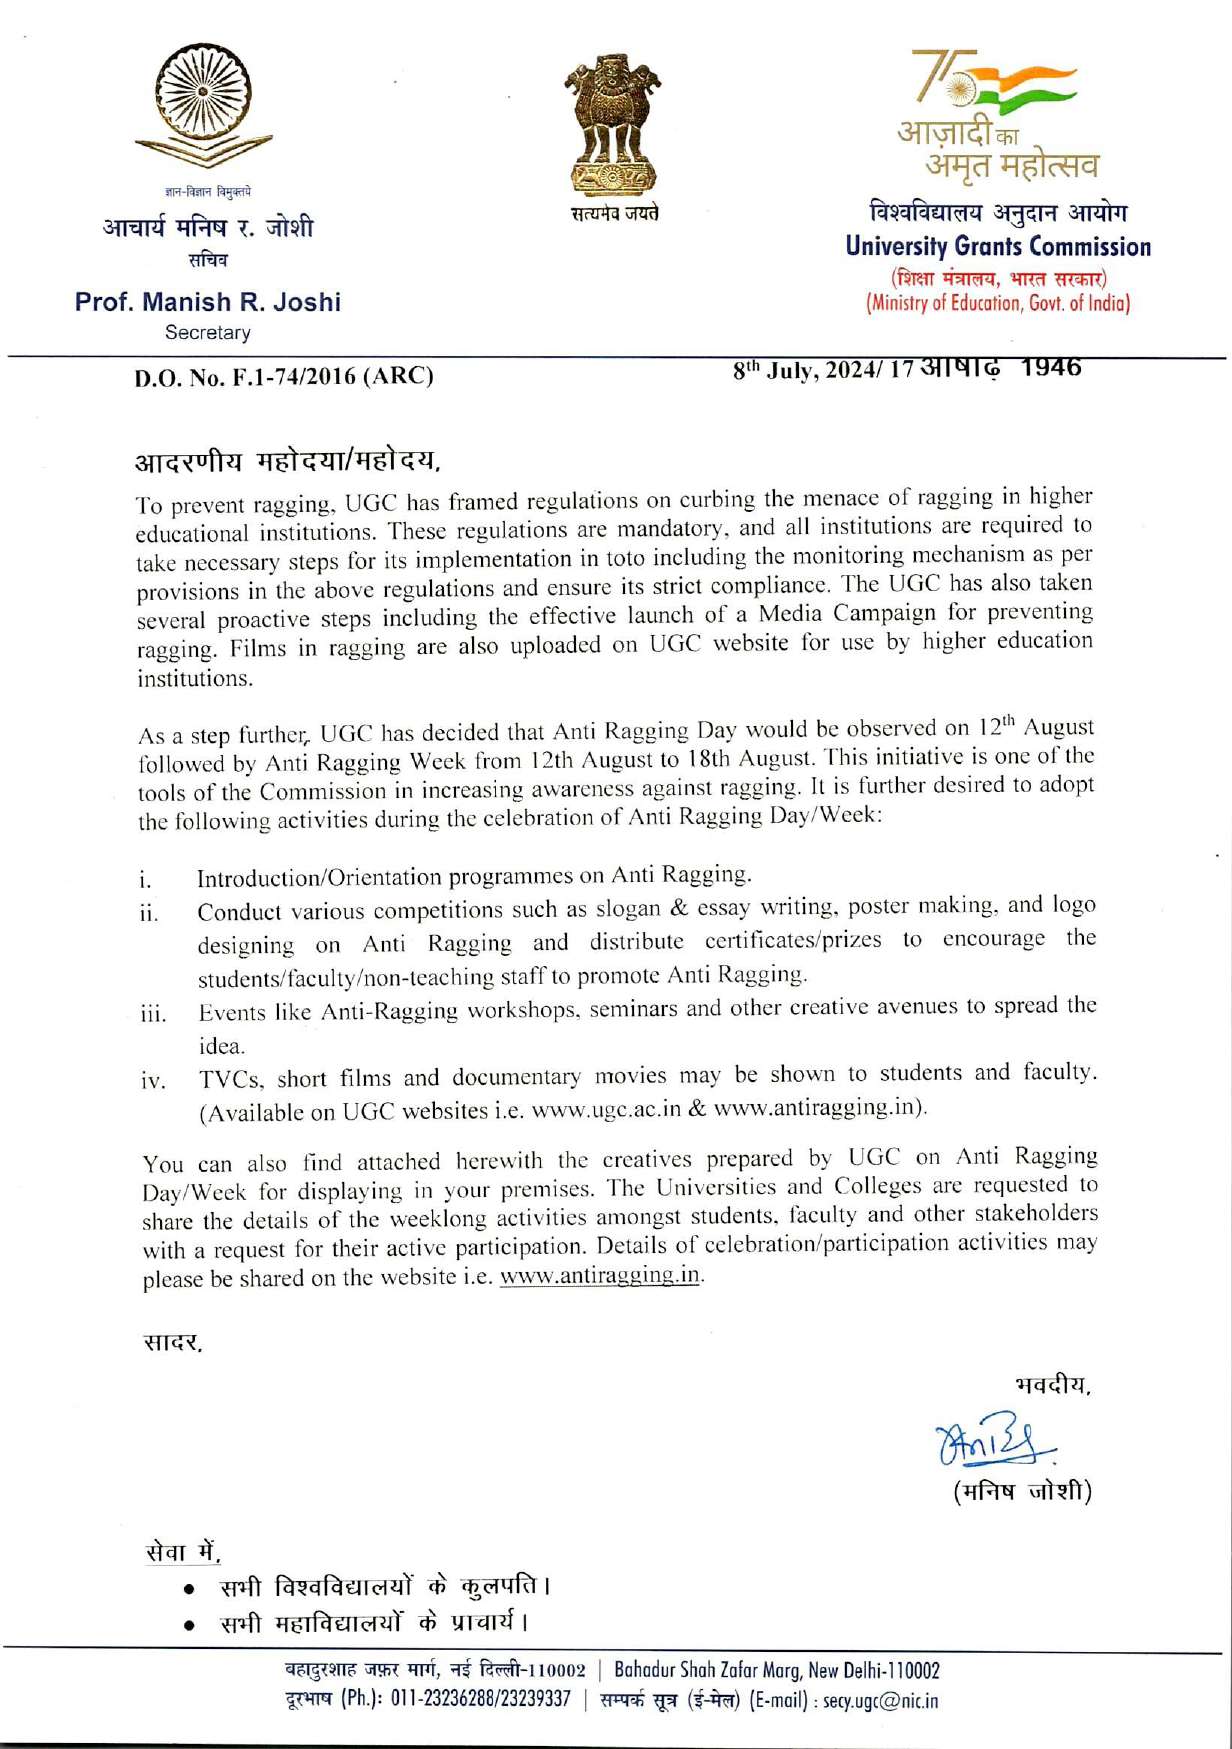 Regarding the Advisory Issued by the Secretary, UGC regarding Anti Ragging